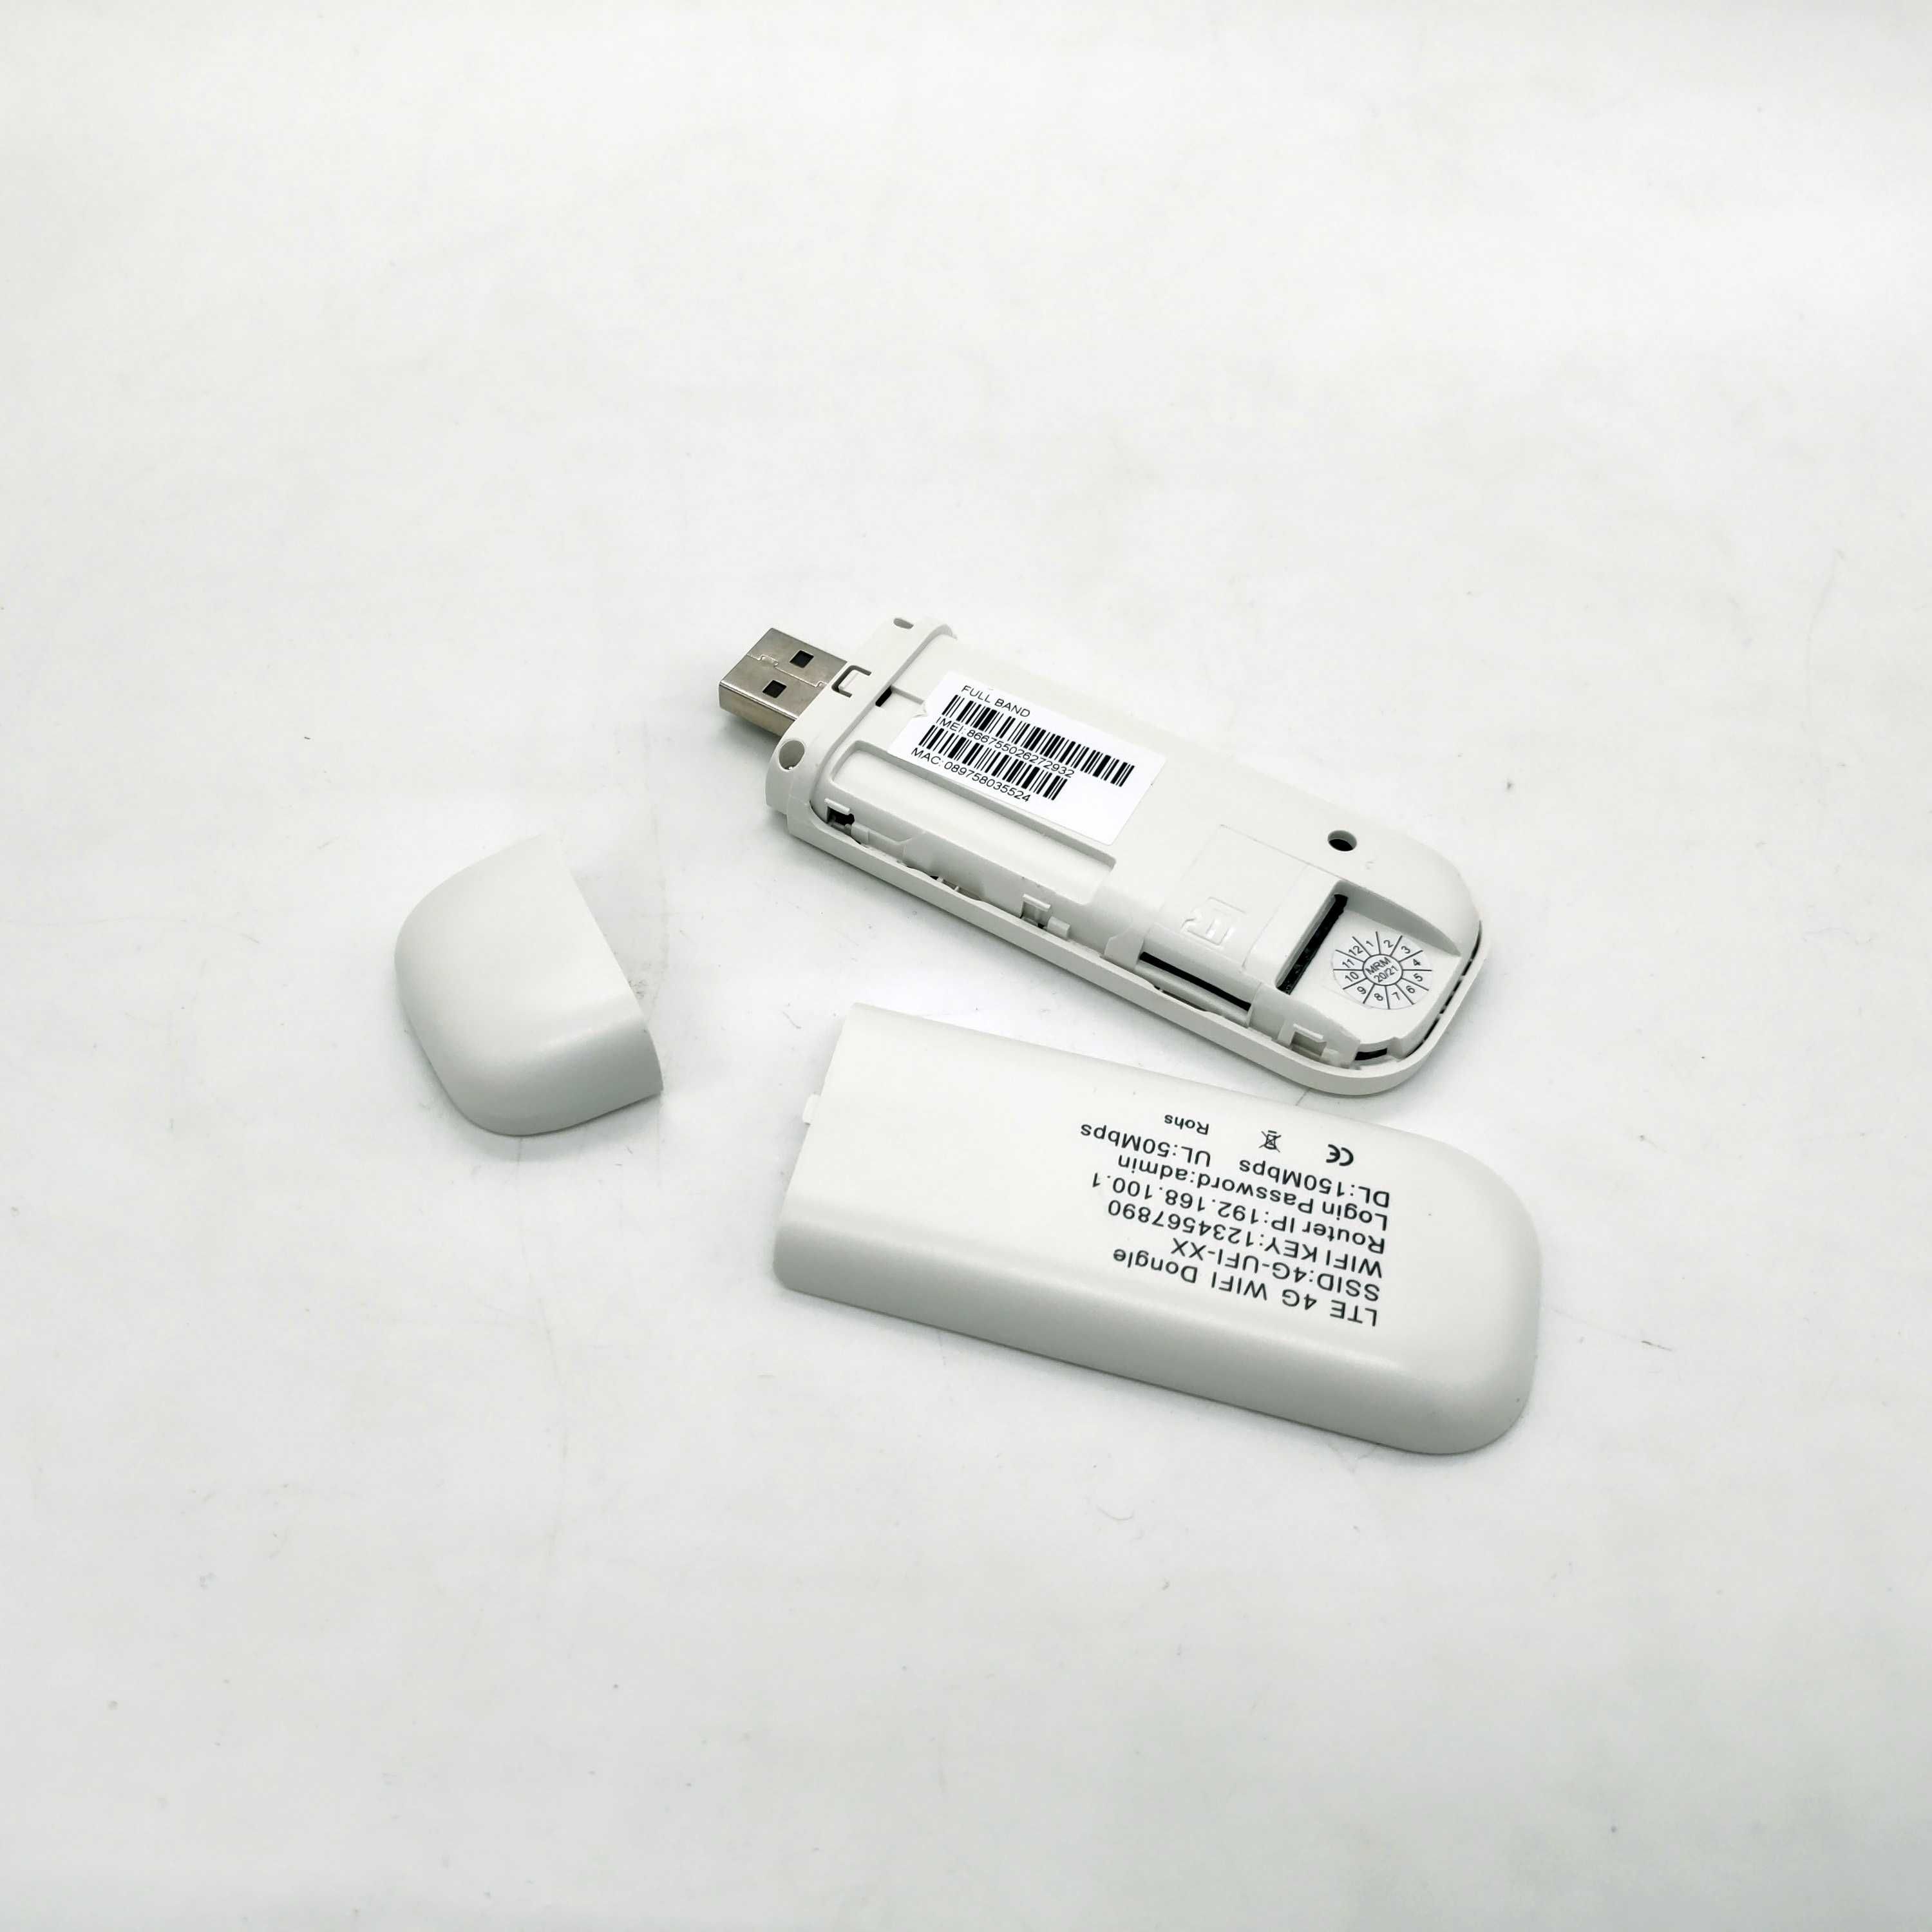 4G LTE USB модем ZN-1 с Wi-Fi 150Mbps